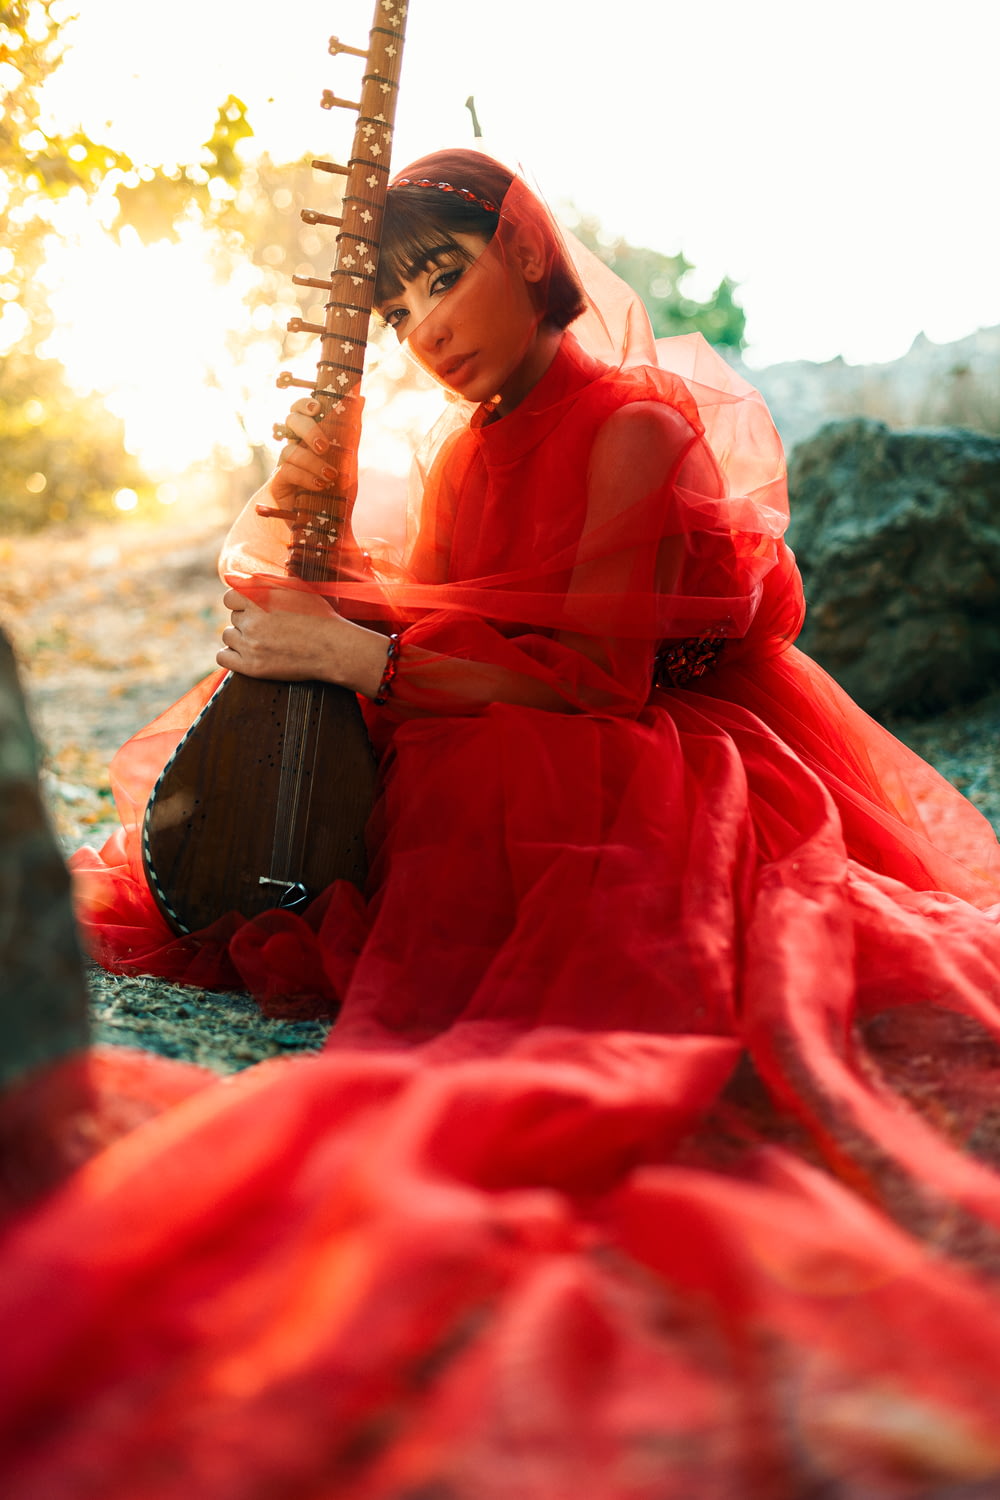 Une femme en robe rouge tient une guitare